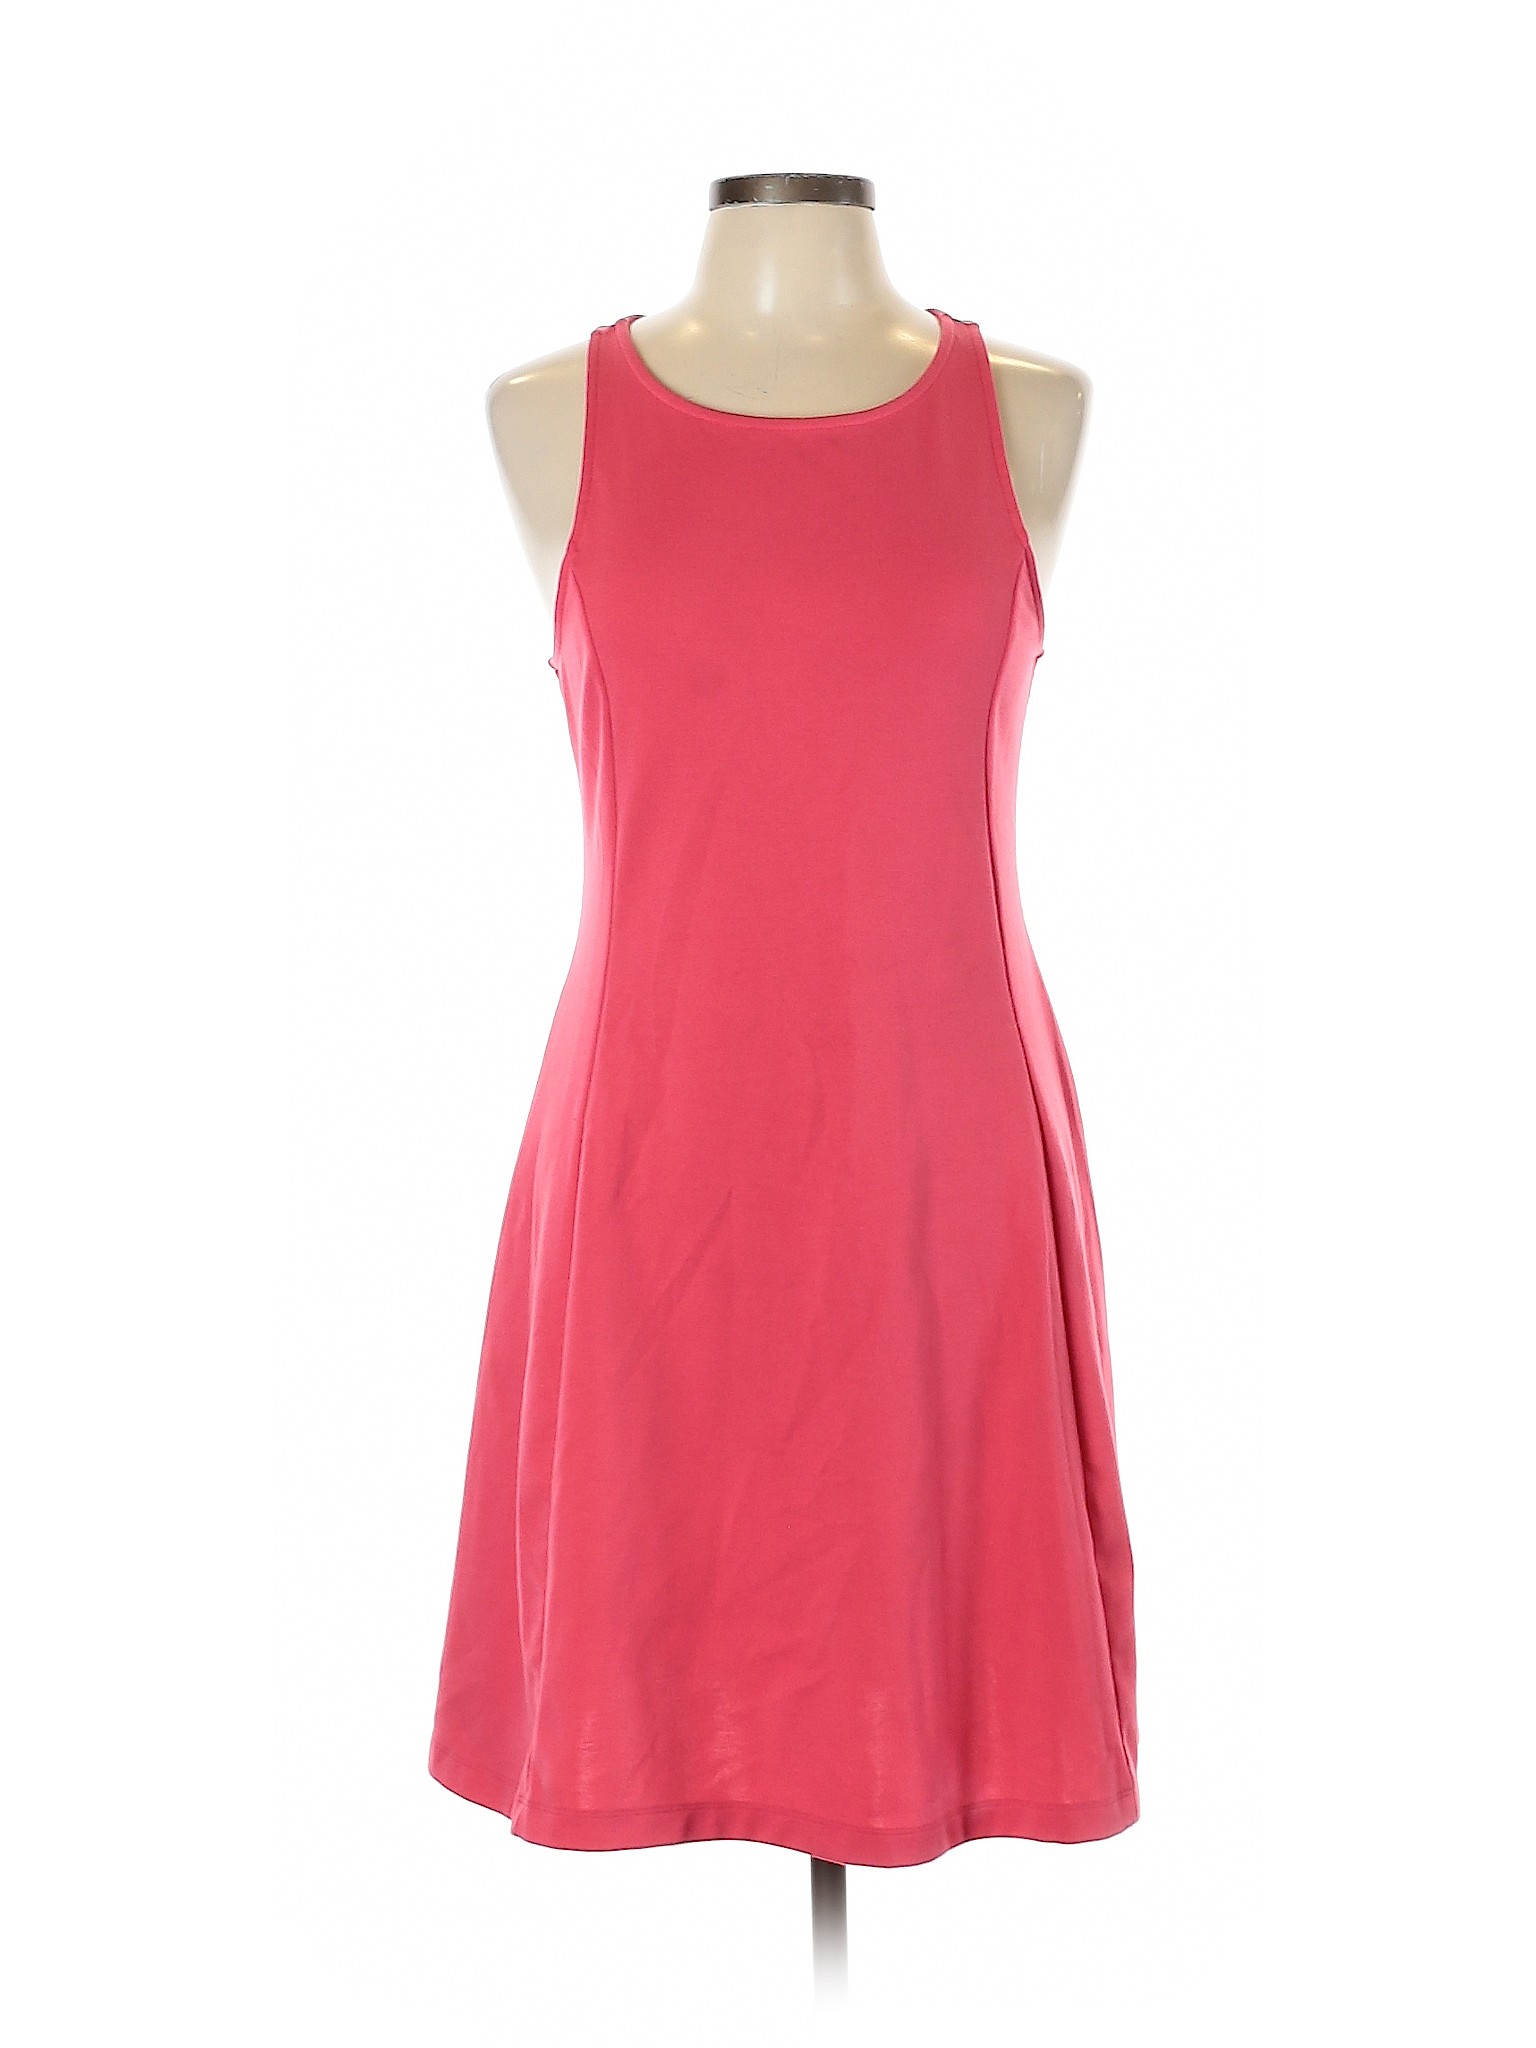 Old Navy Women Pink Casual Dress L | eBay